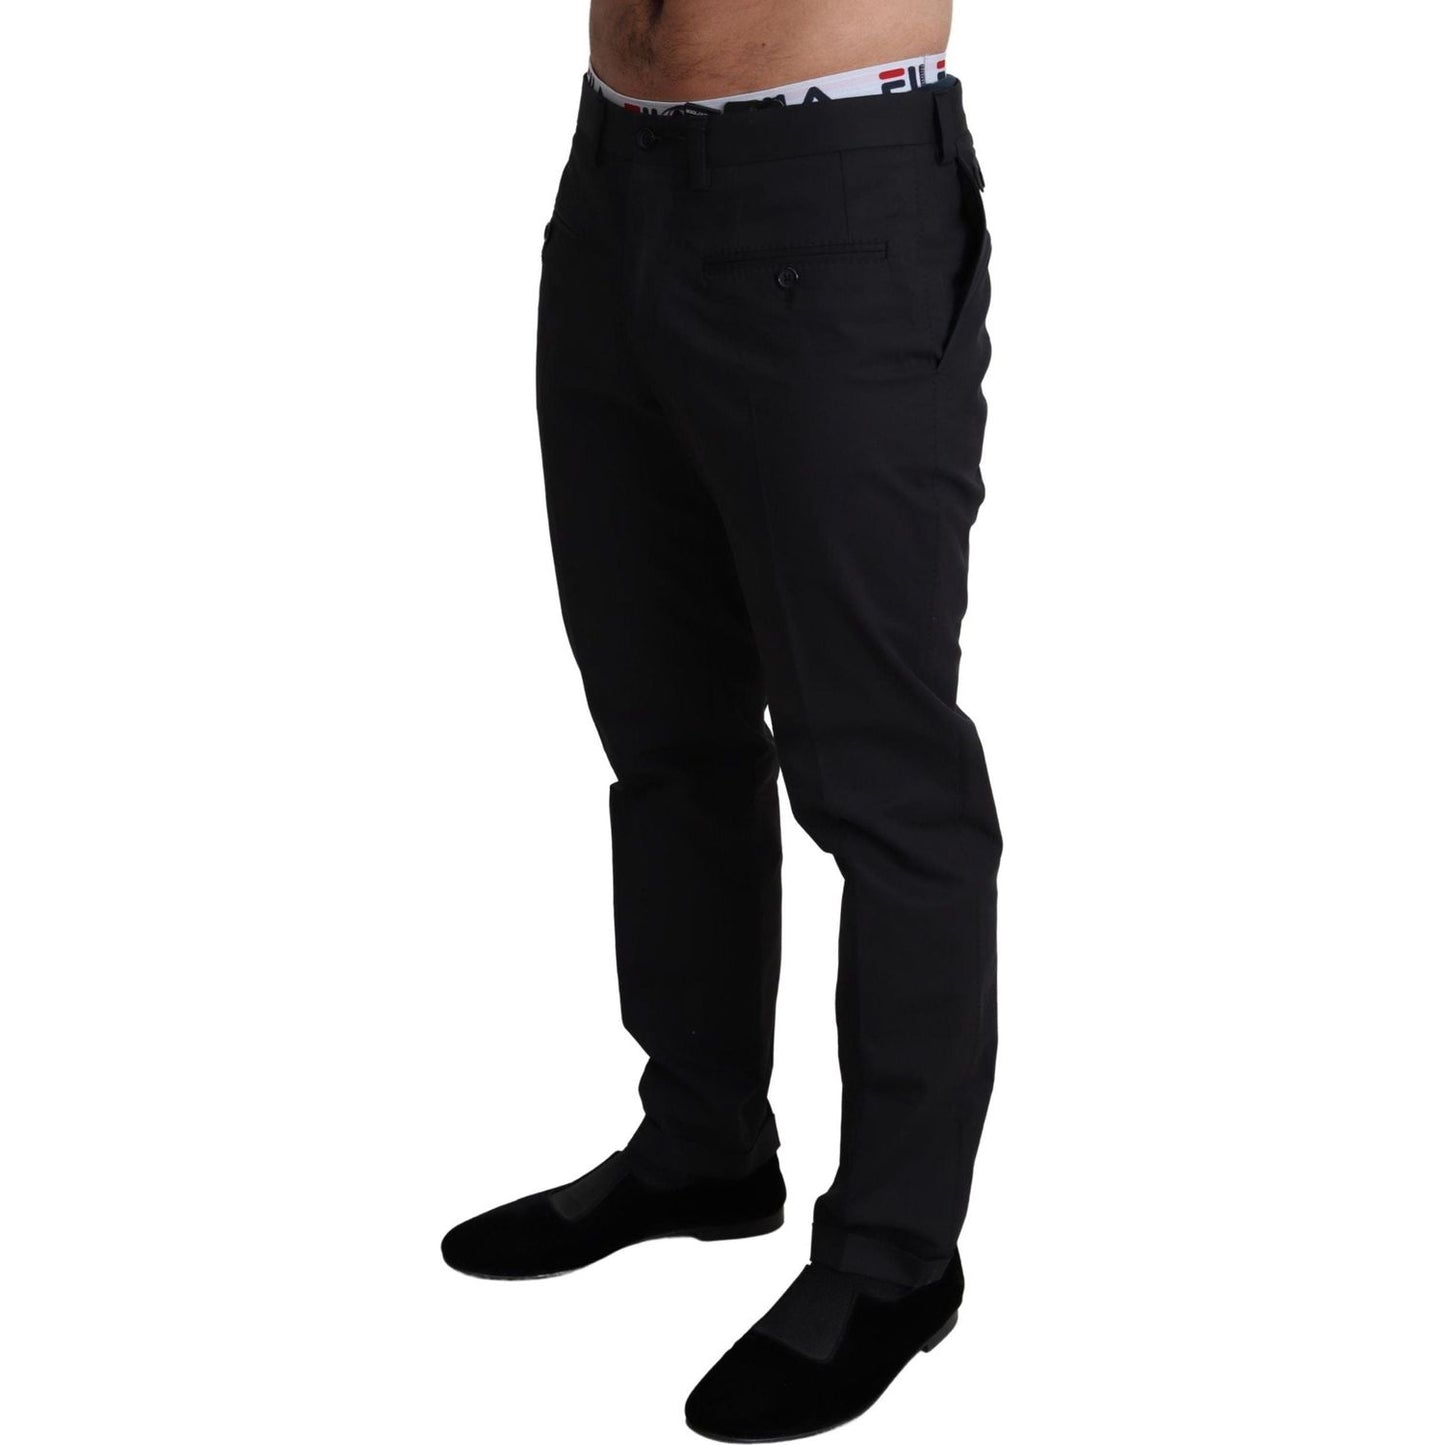 Dolce & Gabbana Elegant Black Stretch Cotton Trousers black-cotton-stretch-dress-formal-trouser-pants IMG_2281-scaled-c7f4b9b2-f2c.jpg